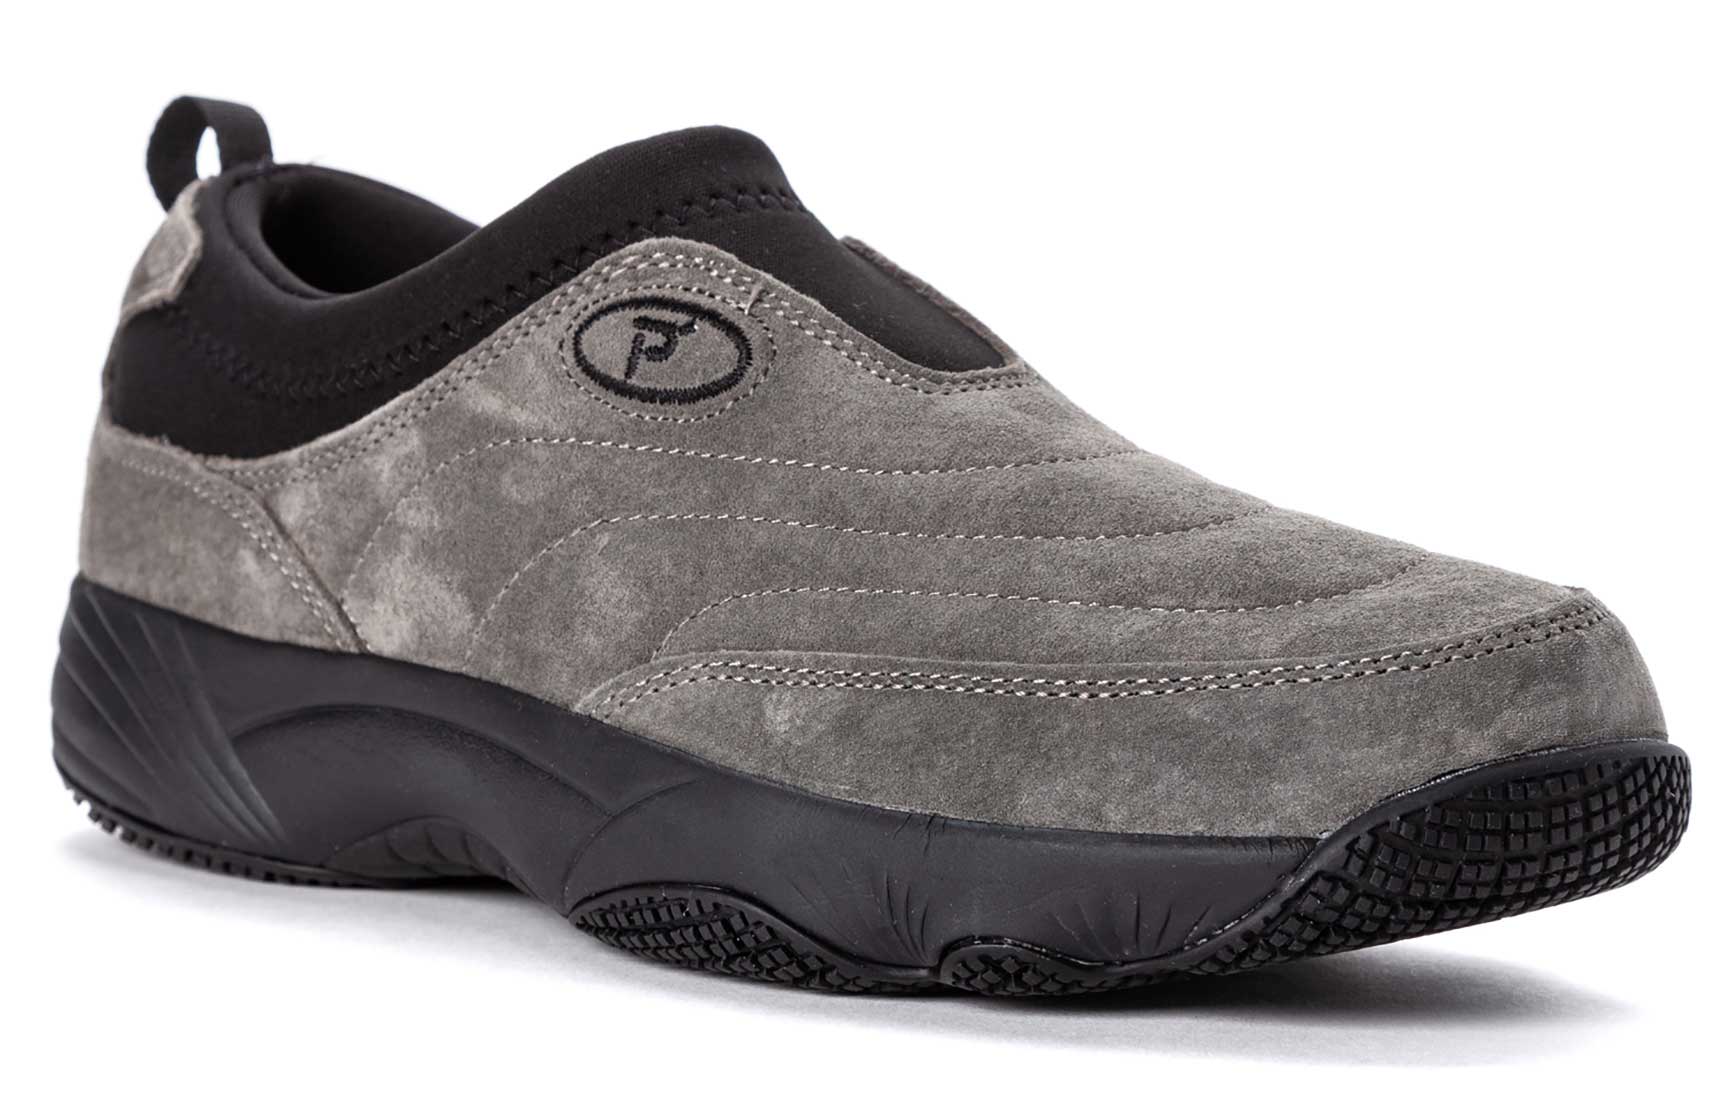 Propet M3850 Wash & Wear Slip On II Men's Casual, Comfort, Diabetic Casual Shoe - Extra Depth For Orthotics